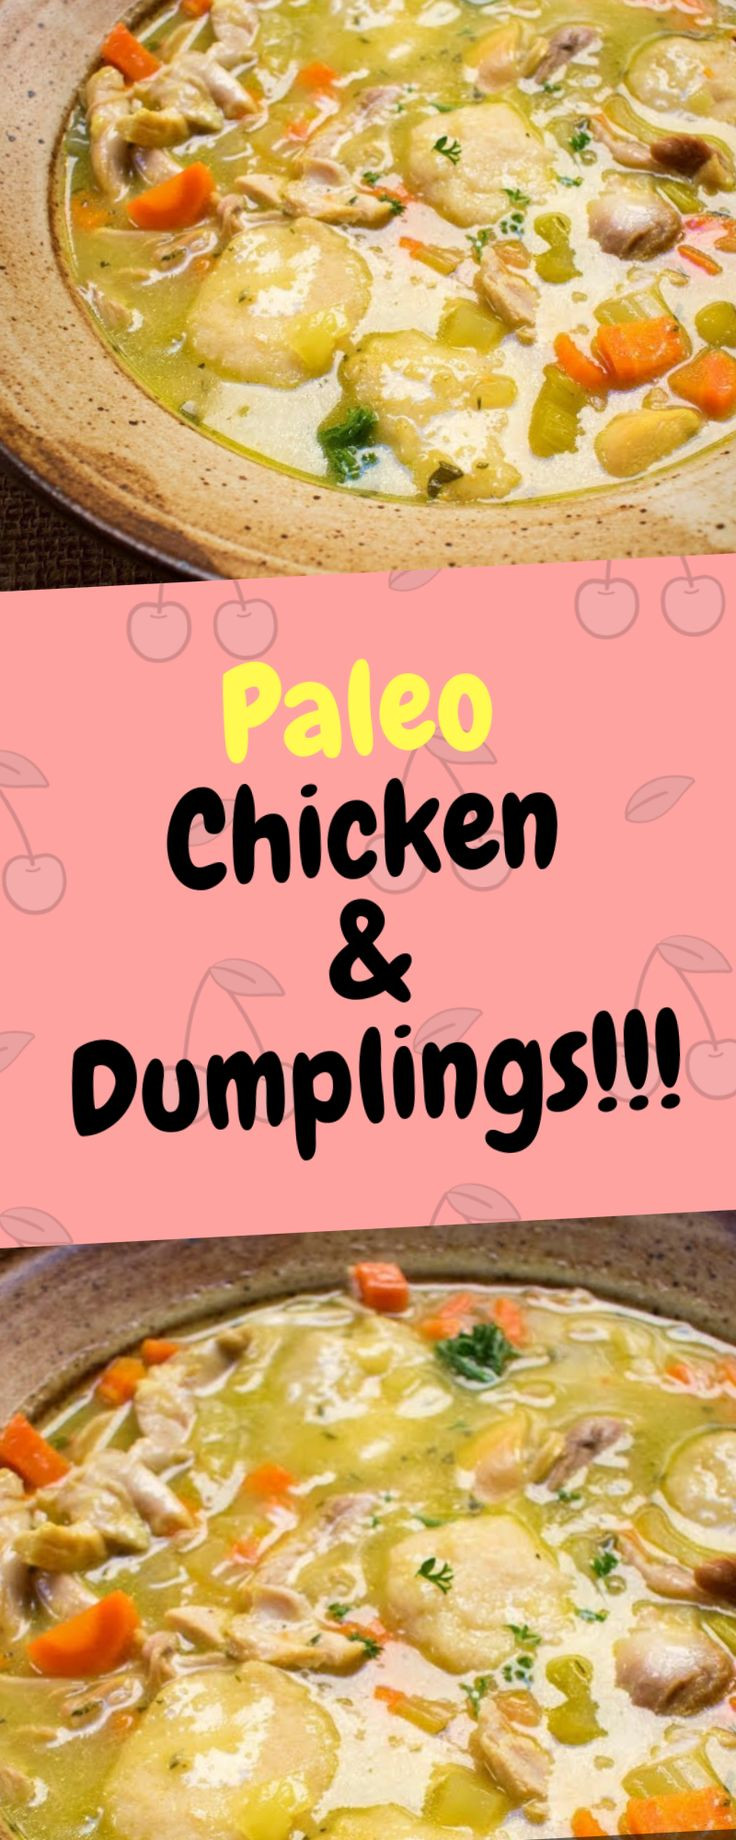 Paleo Chicken And Dumplings
 Paleo Chicken & Dumplings